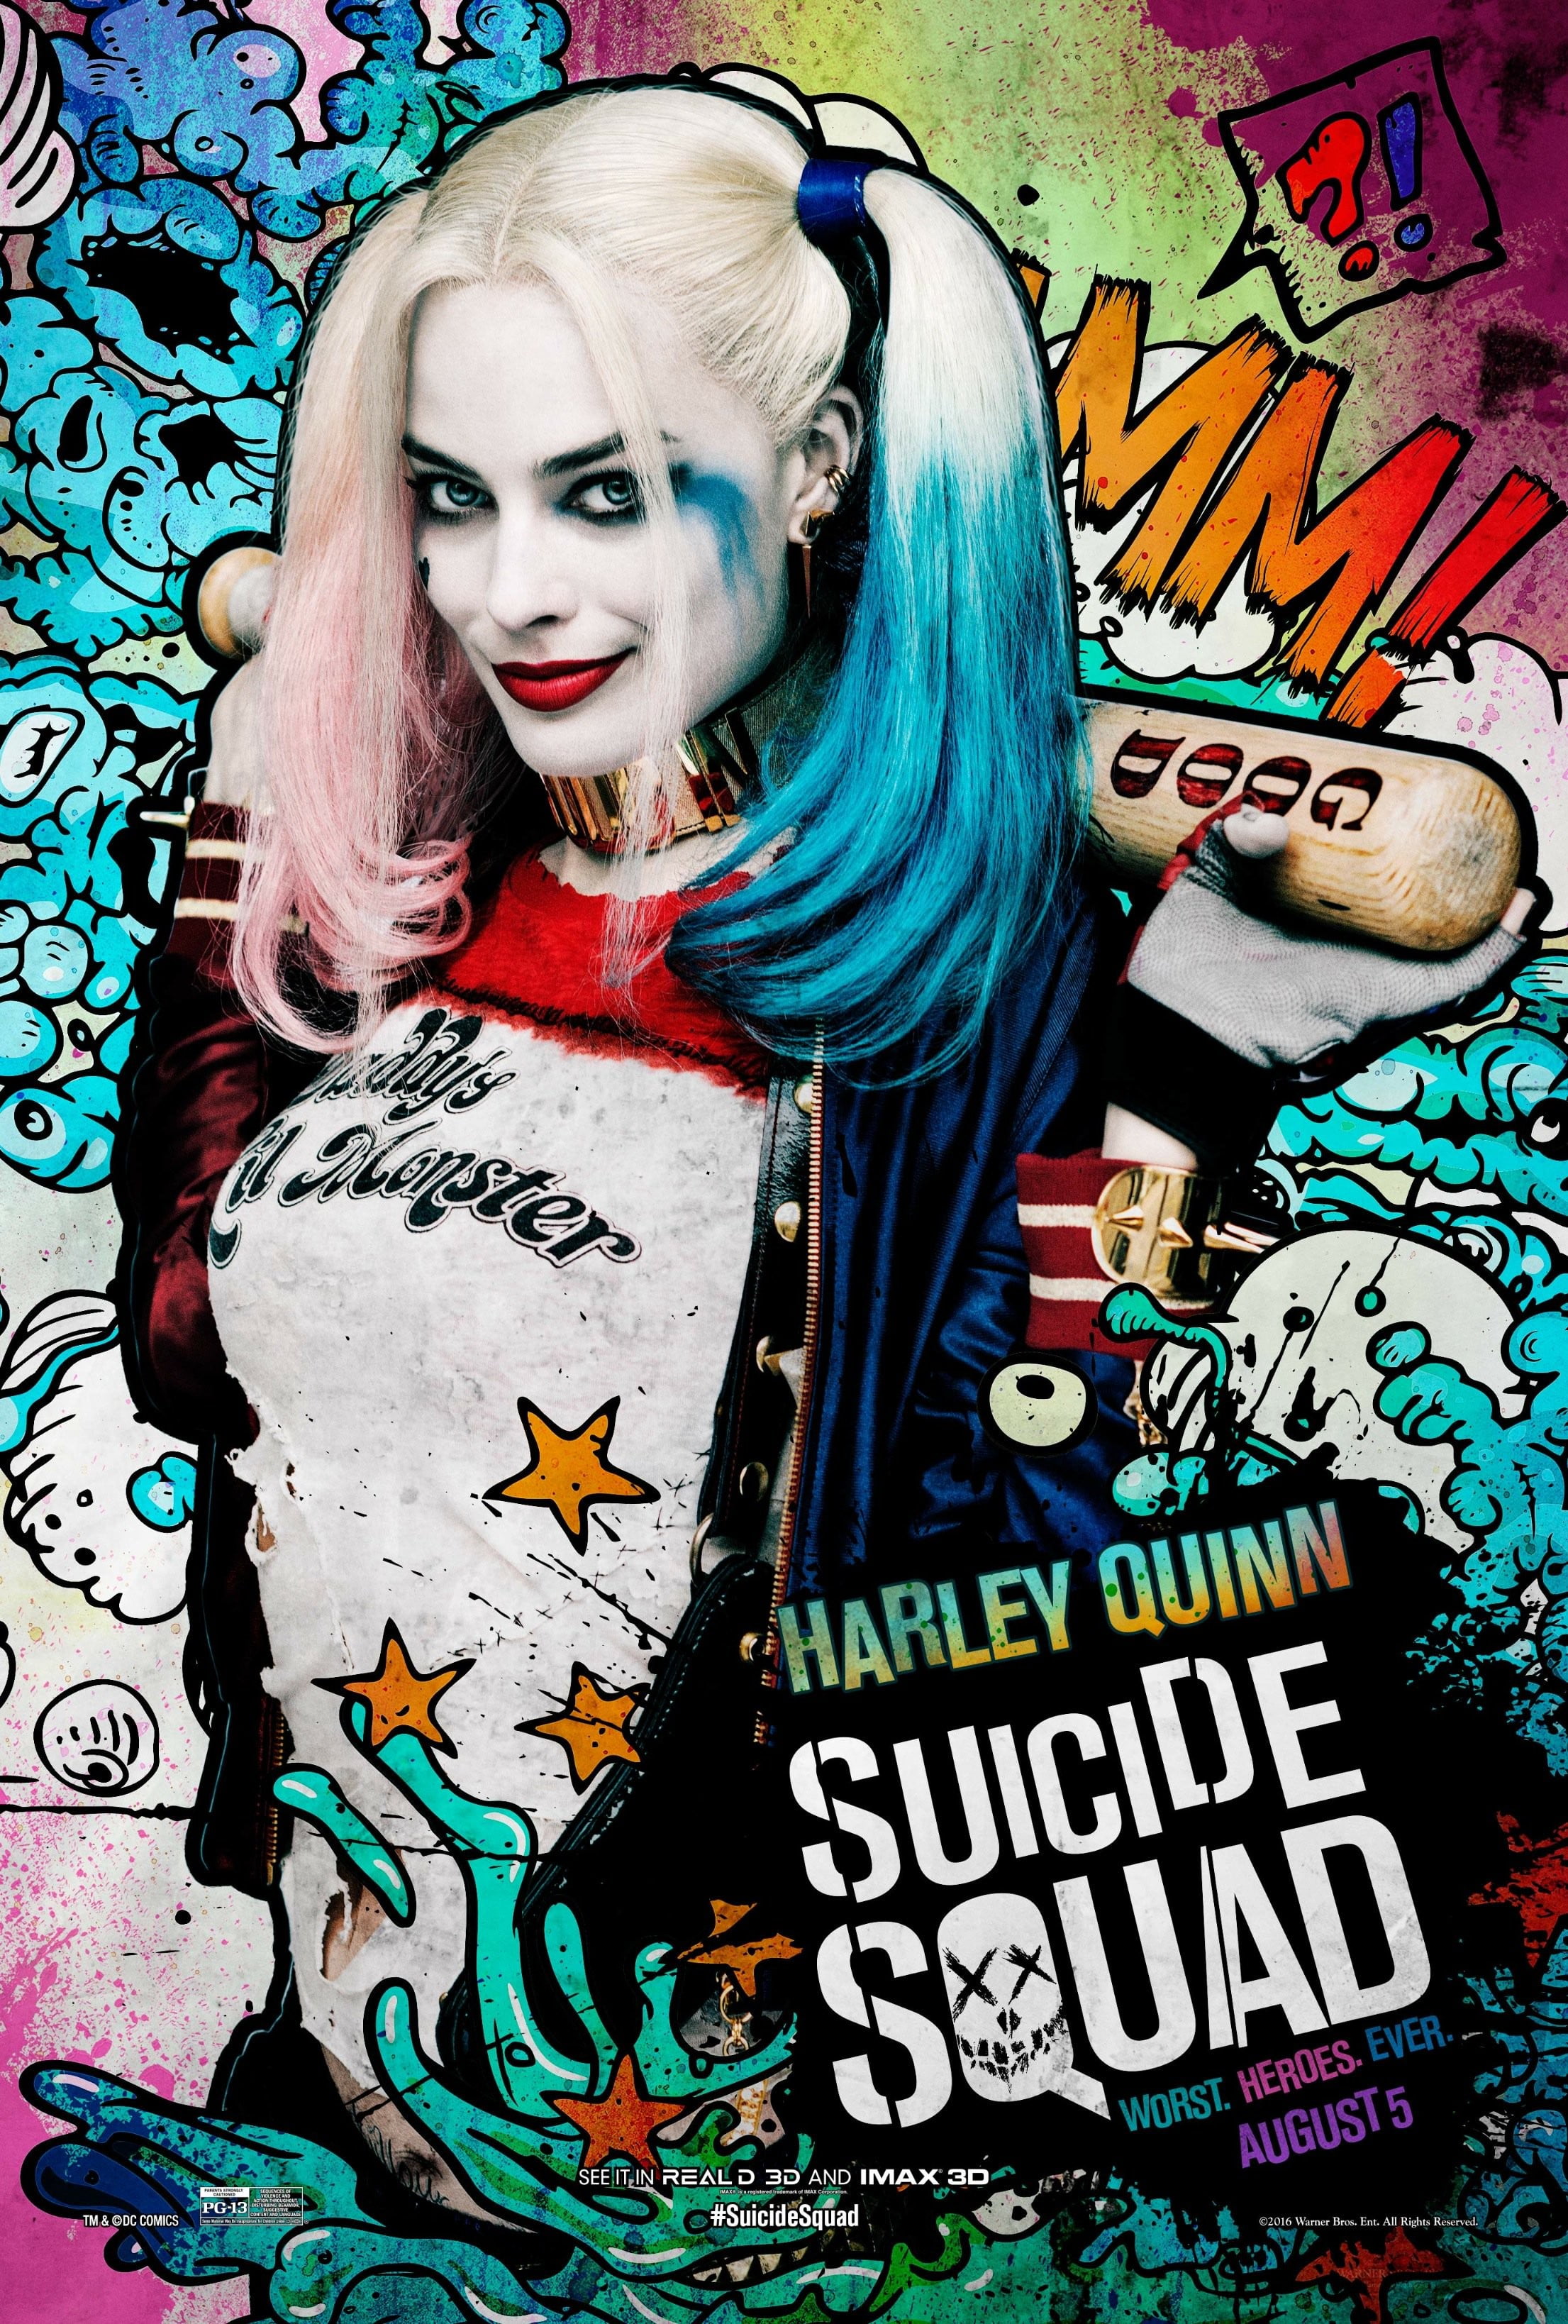 Harley Quinn Suicide Squad digital wallpaper